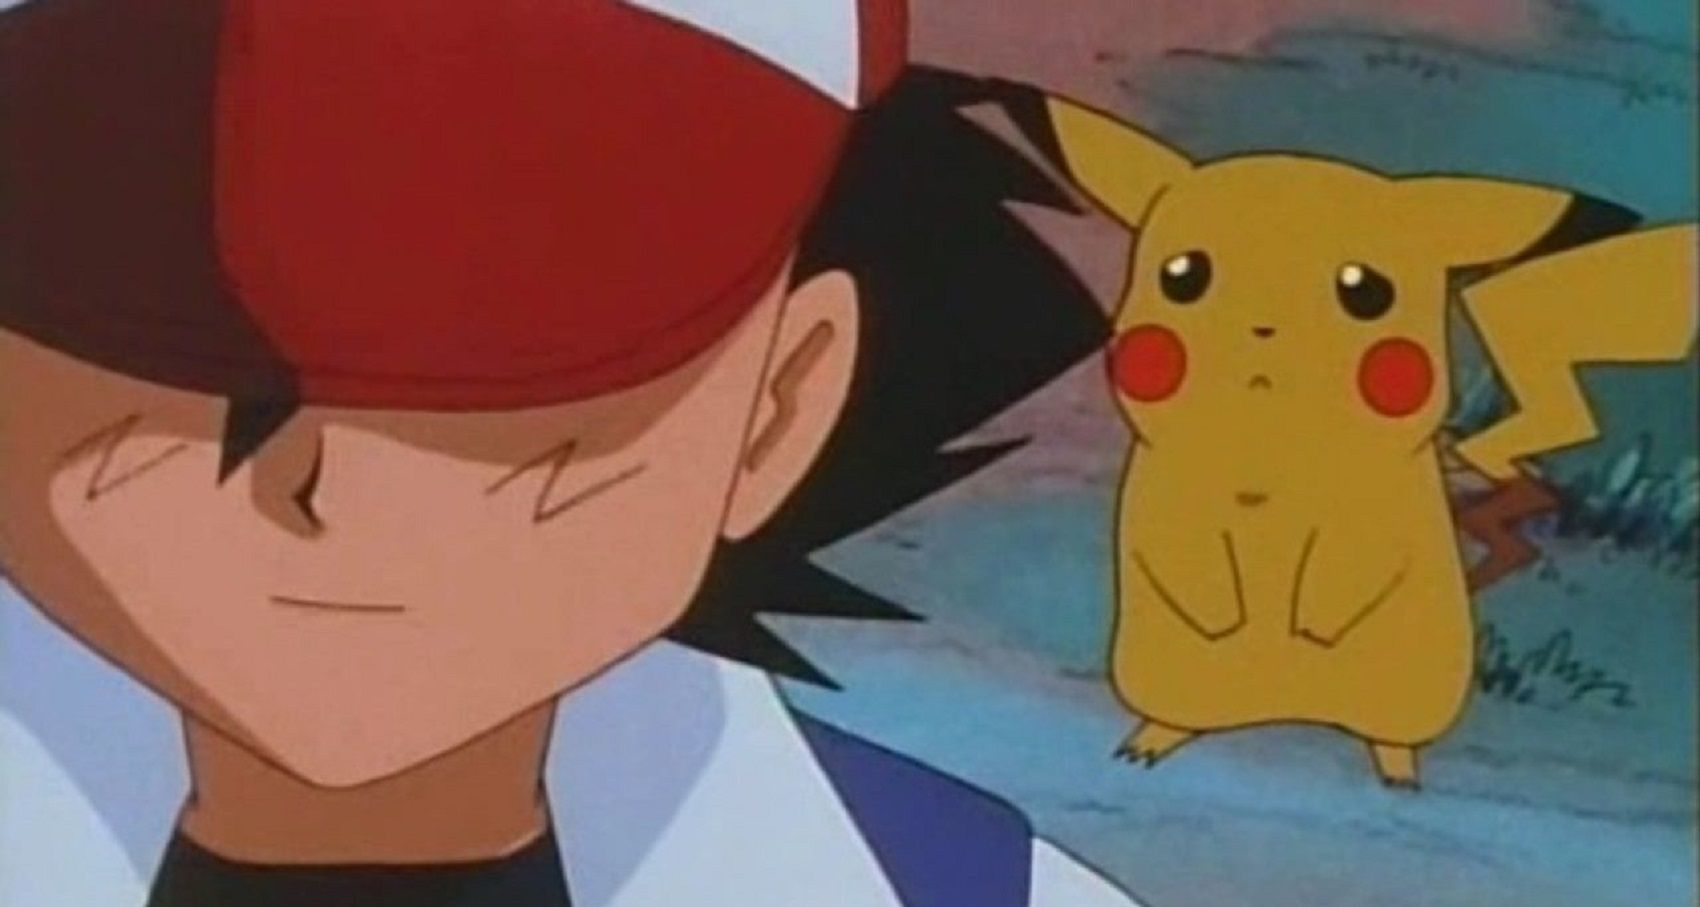 Pokémon' Exec Says Pikachu Made Ash's Starter to Make You Sad